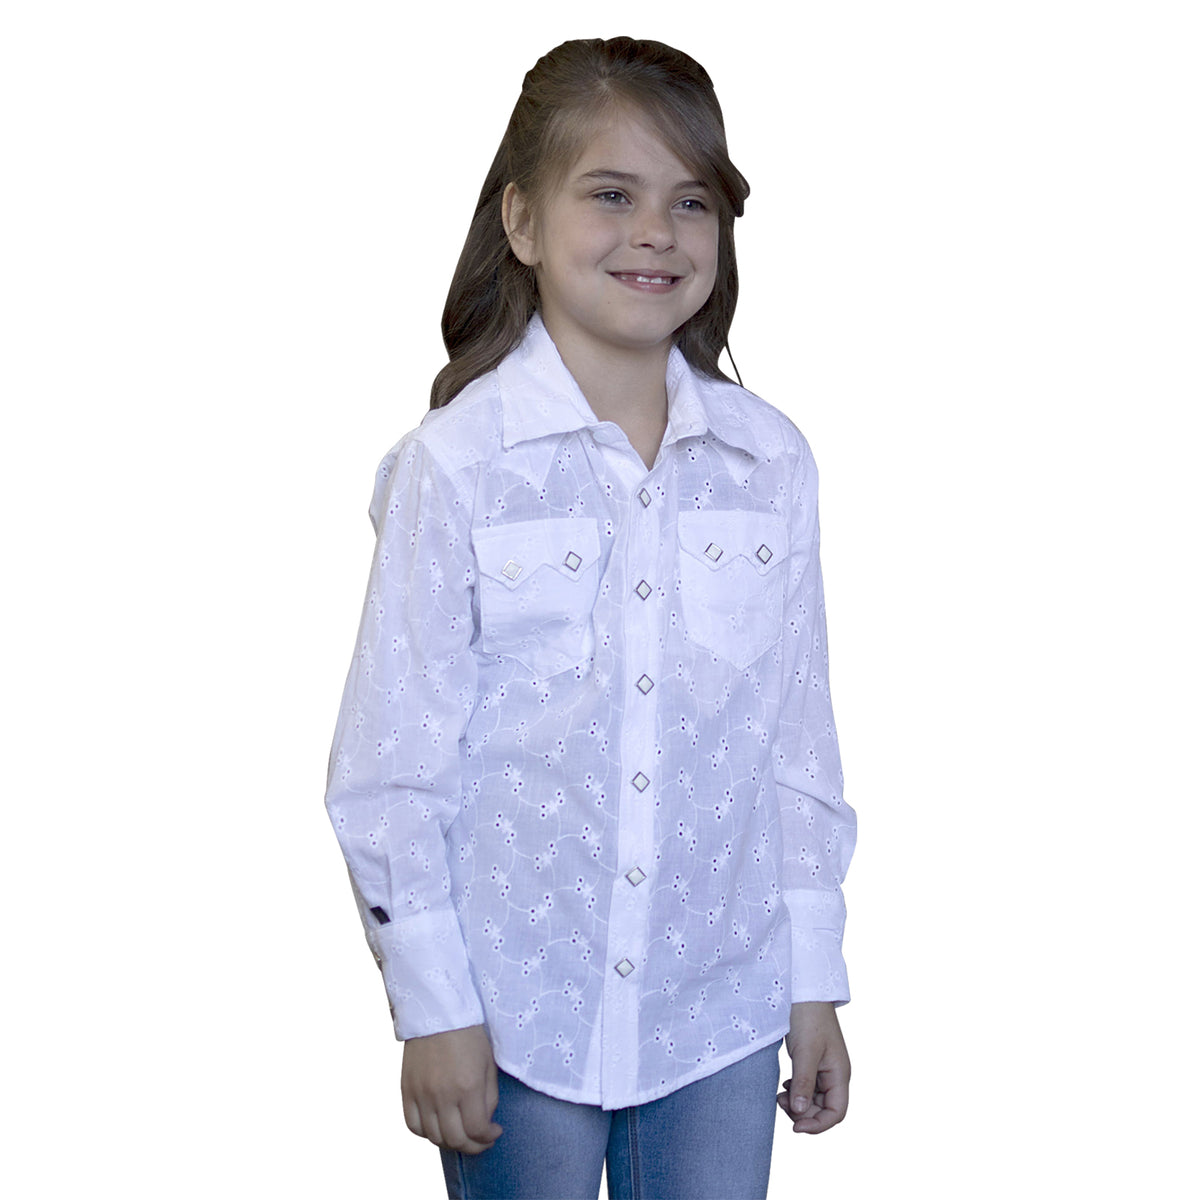 White Eyelet Button Down Shirt For Women - Shoreline Wear, Inc.